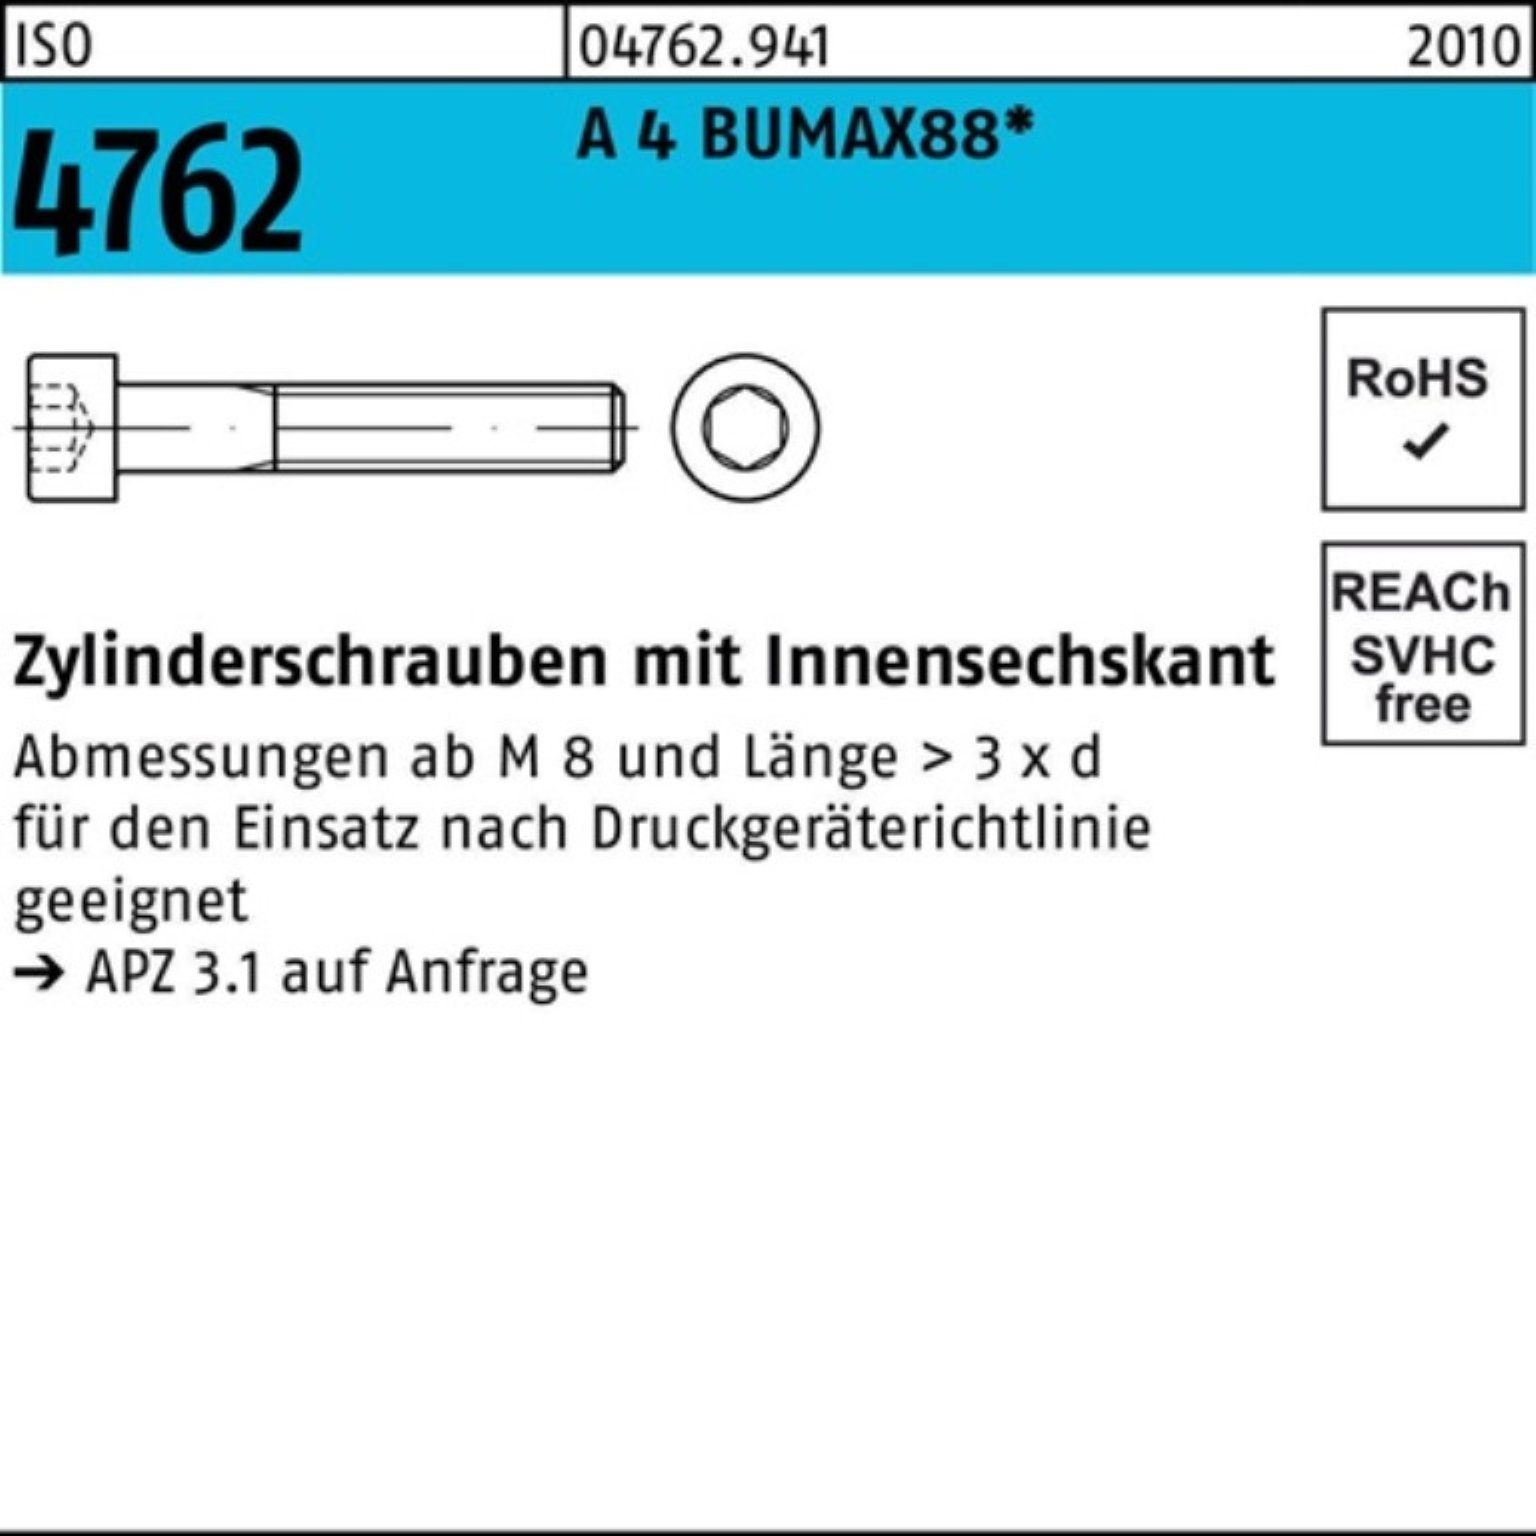 BUMAX88 Bufab 4762 Zylinderschraube 4 A Zylinderschraube ISO Innen-6kt 20 100 M6x 100er Pack